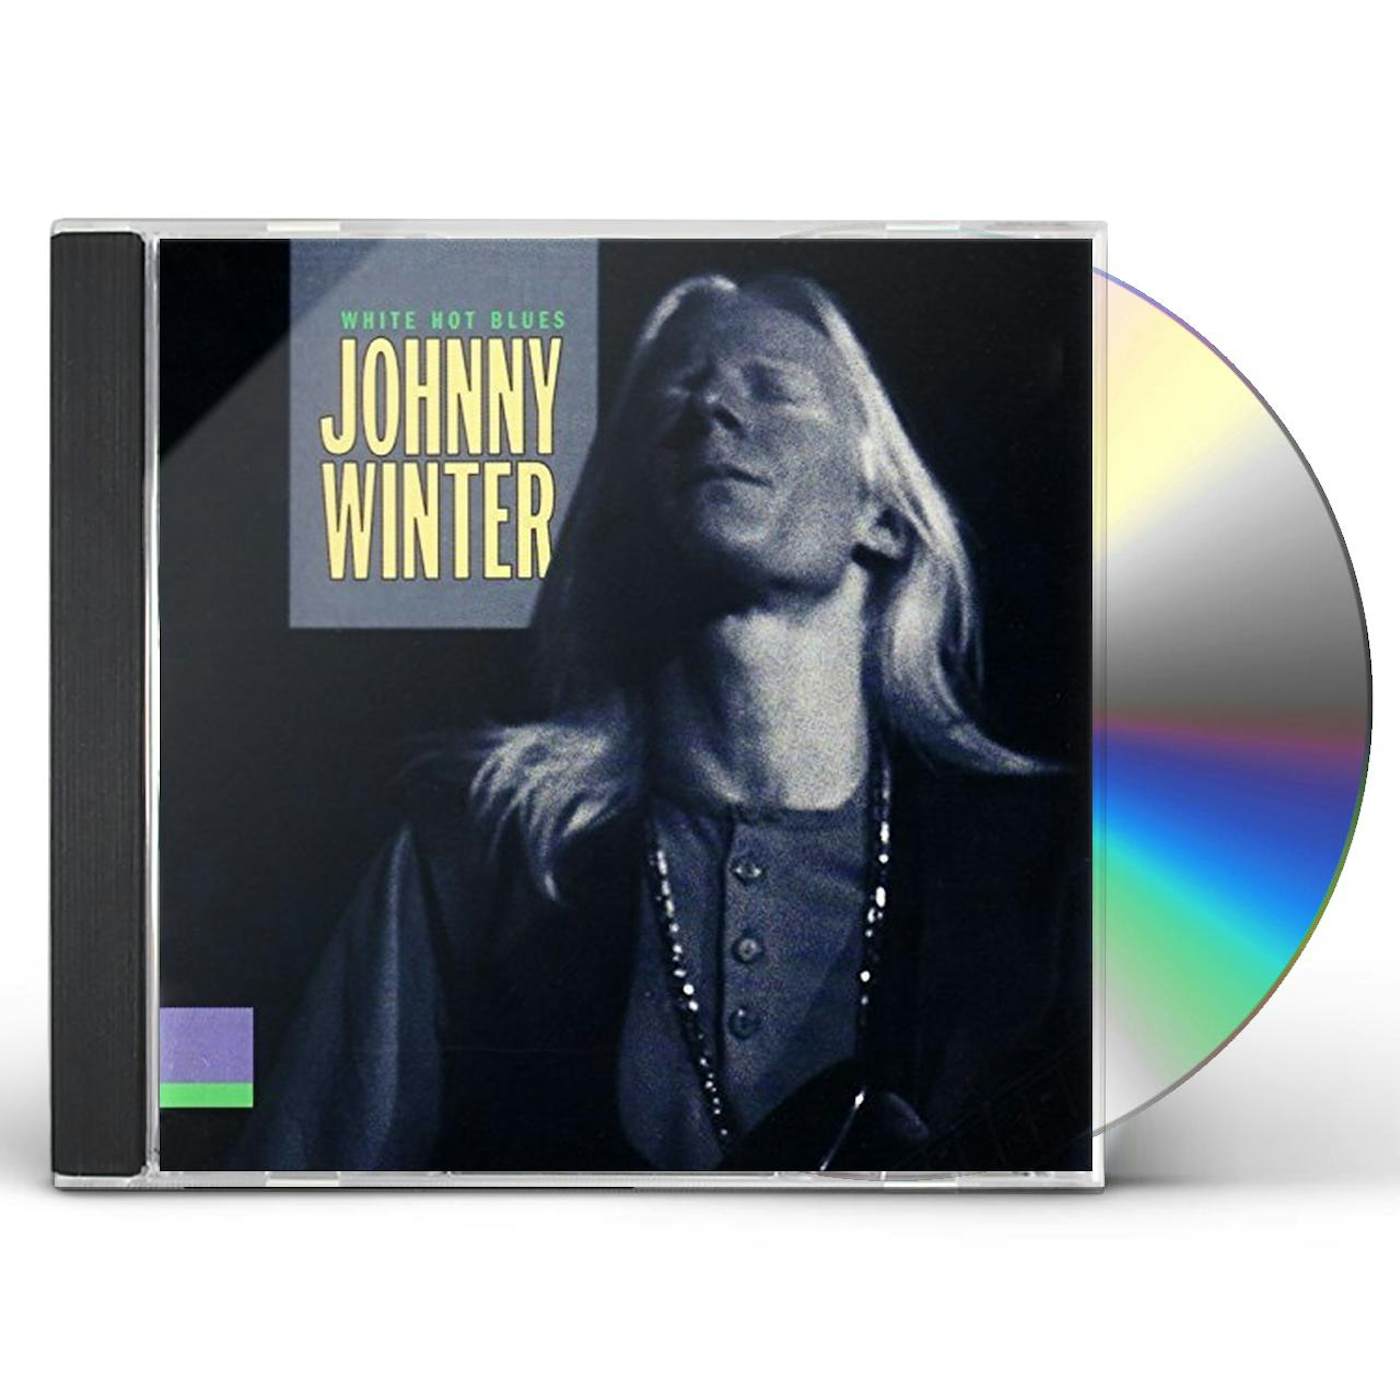 Johnny Winter WHITE HOT BLUES CD